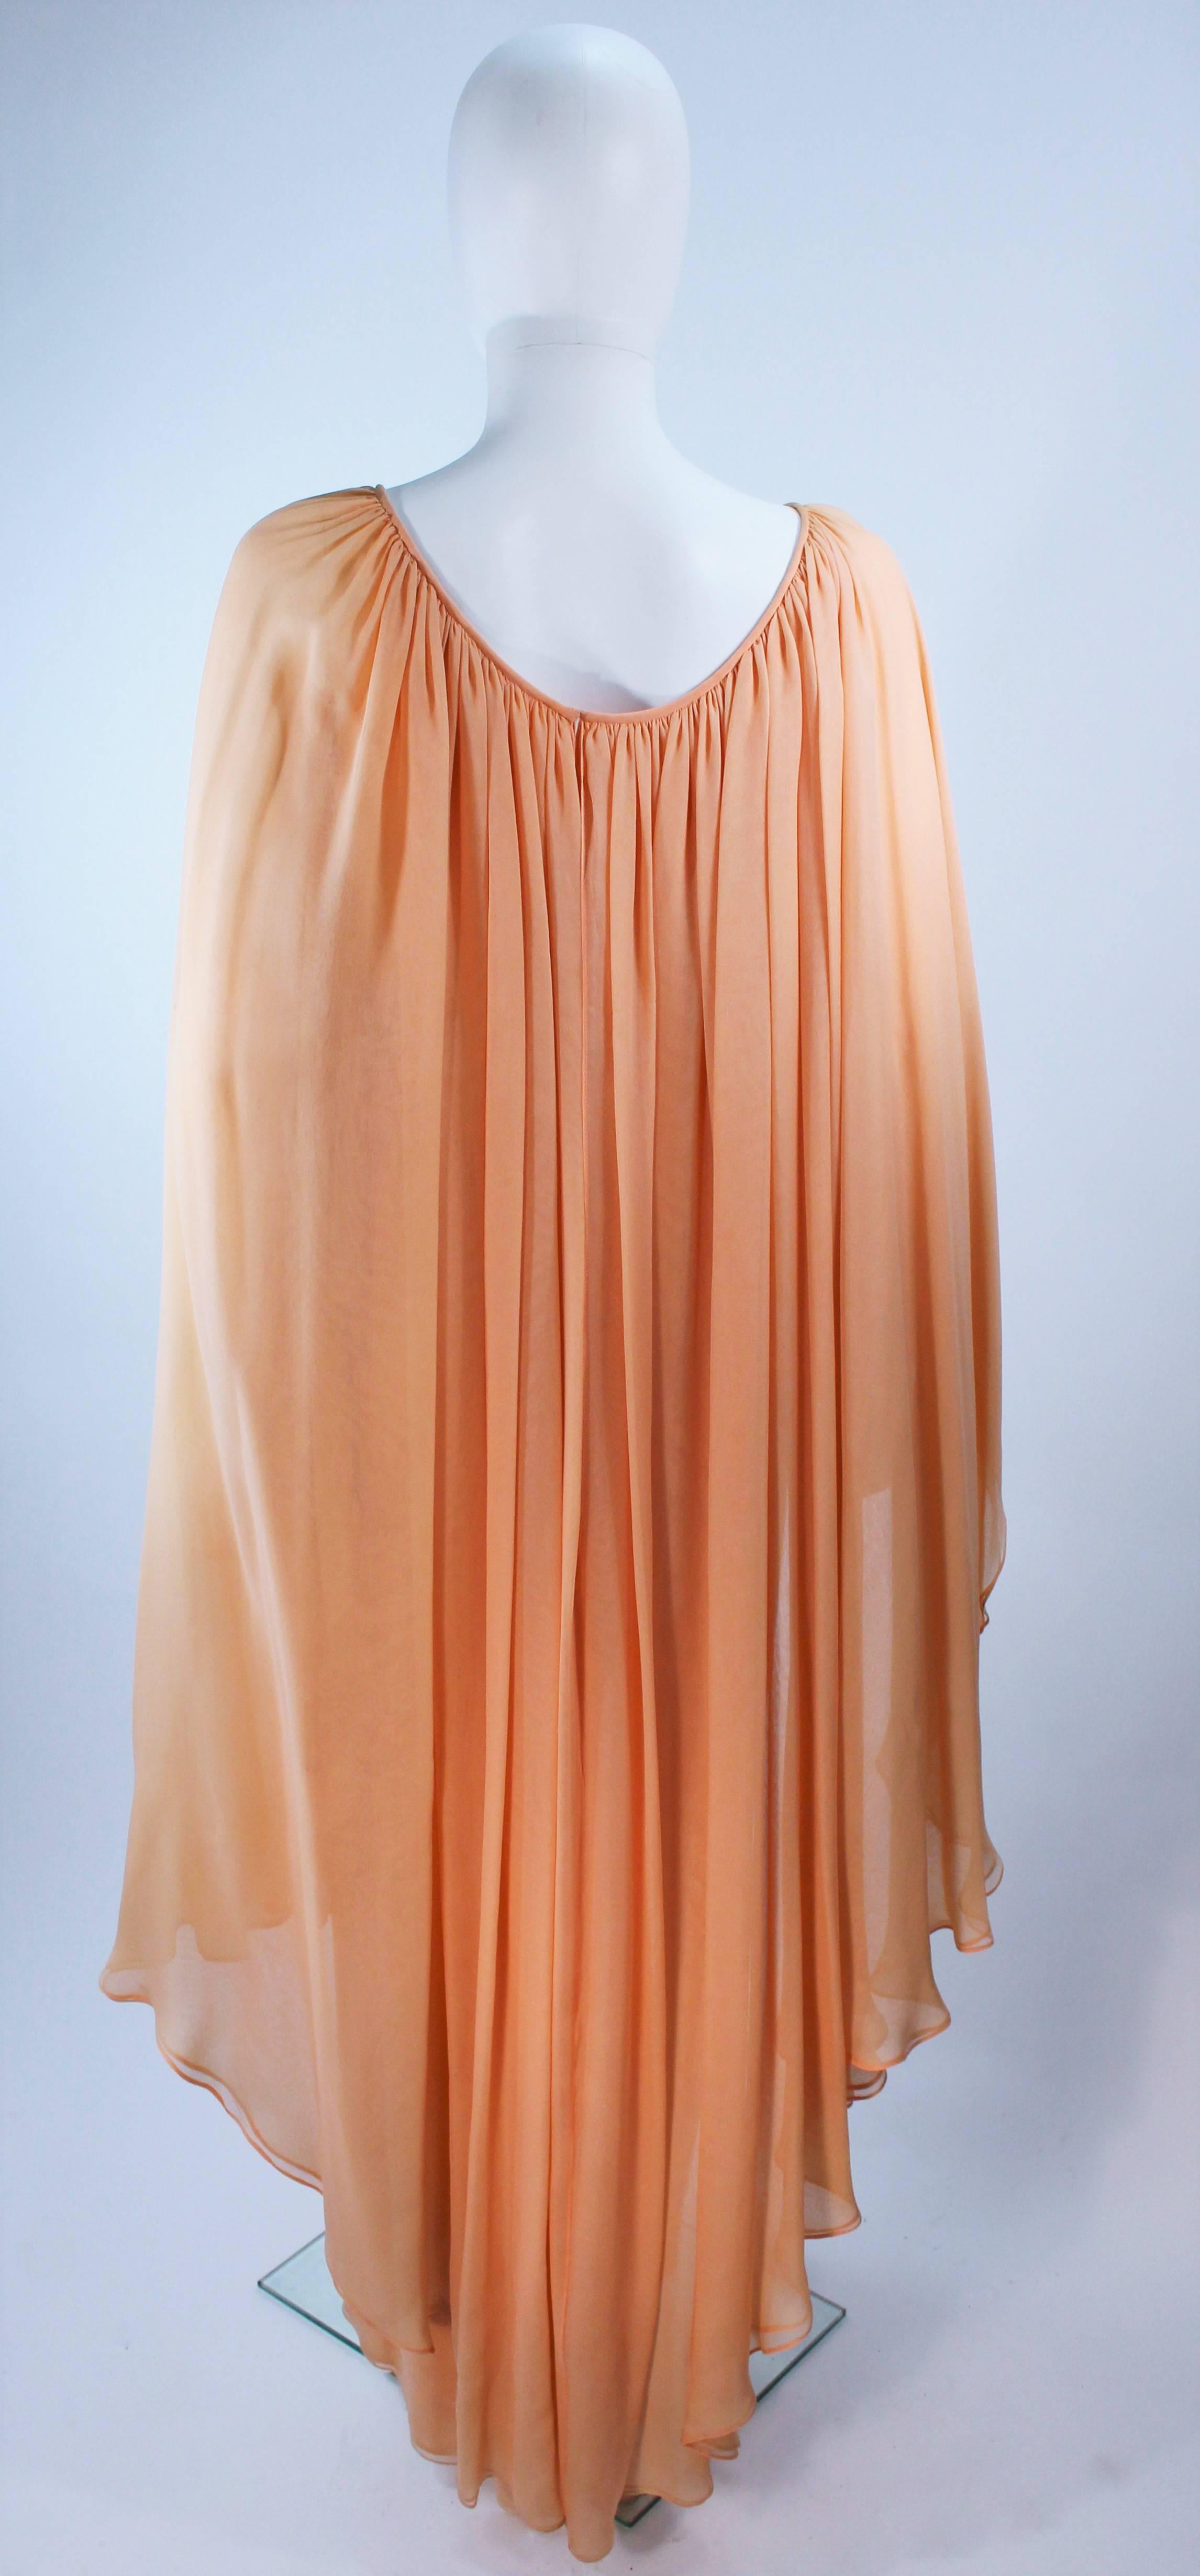 BONWIT TELLER Peach & Apricot Hue Draped Cape Gown Size 4 For Sale 2